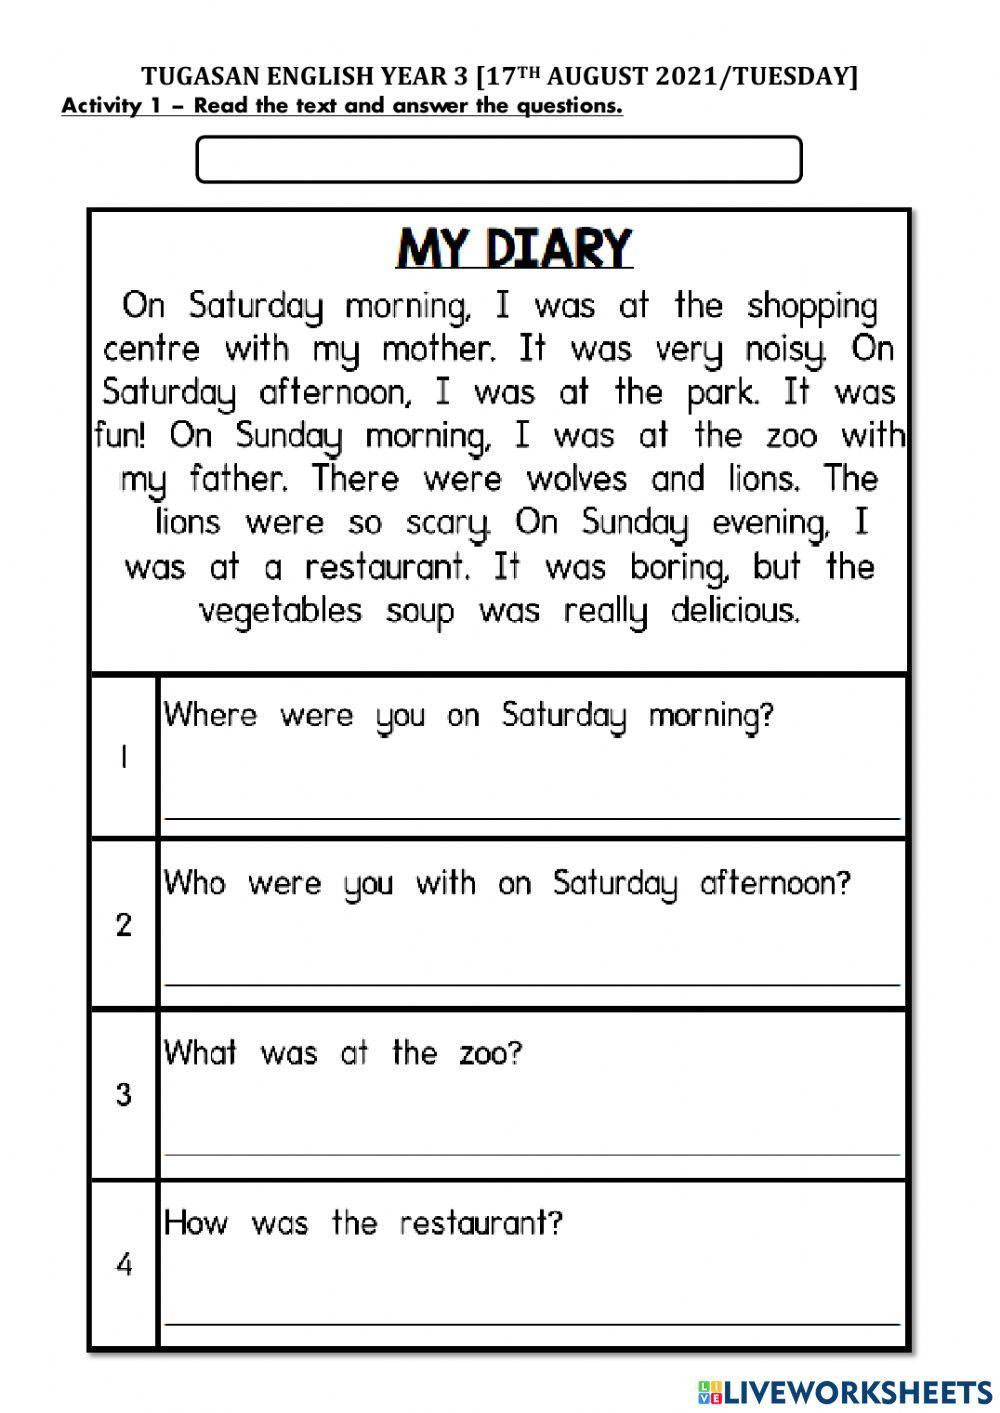 Get Smart Plus 3: Module 8 (My Diary)